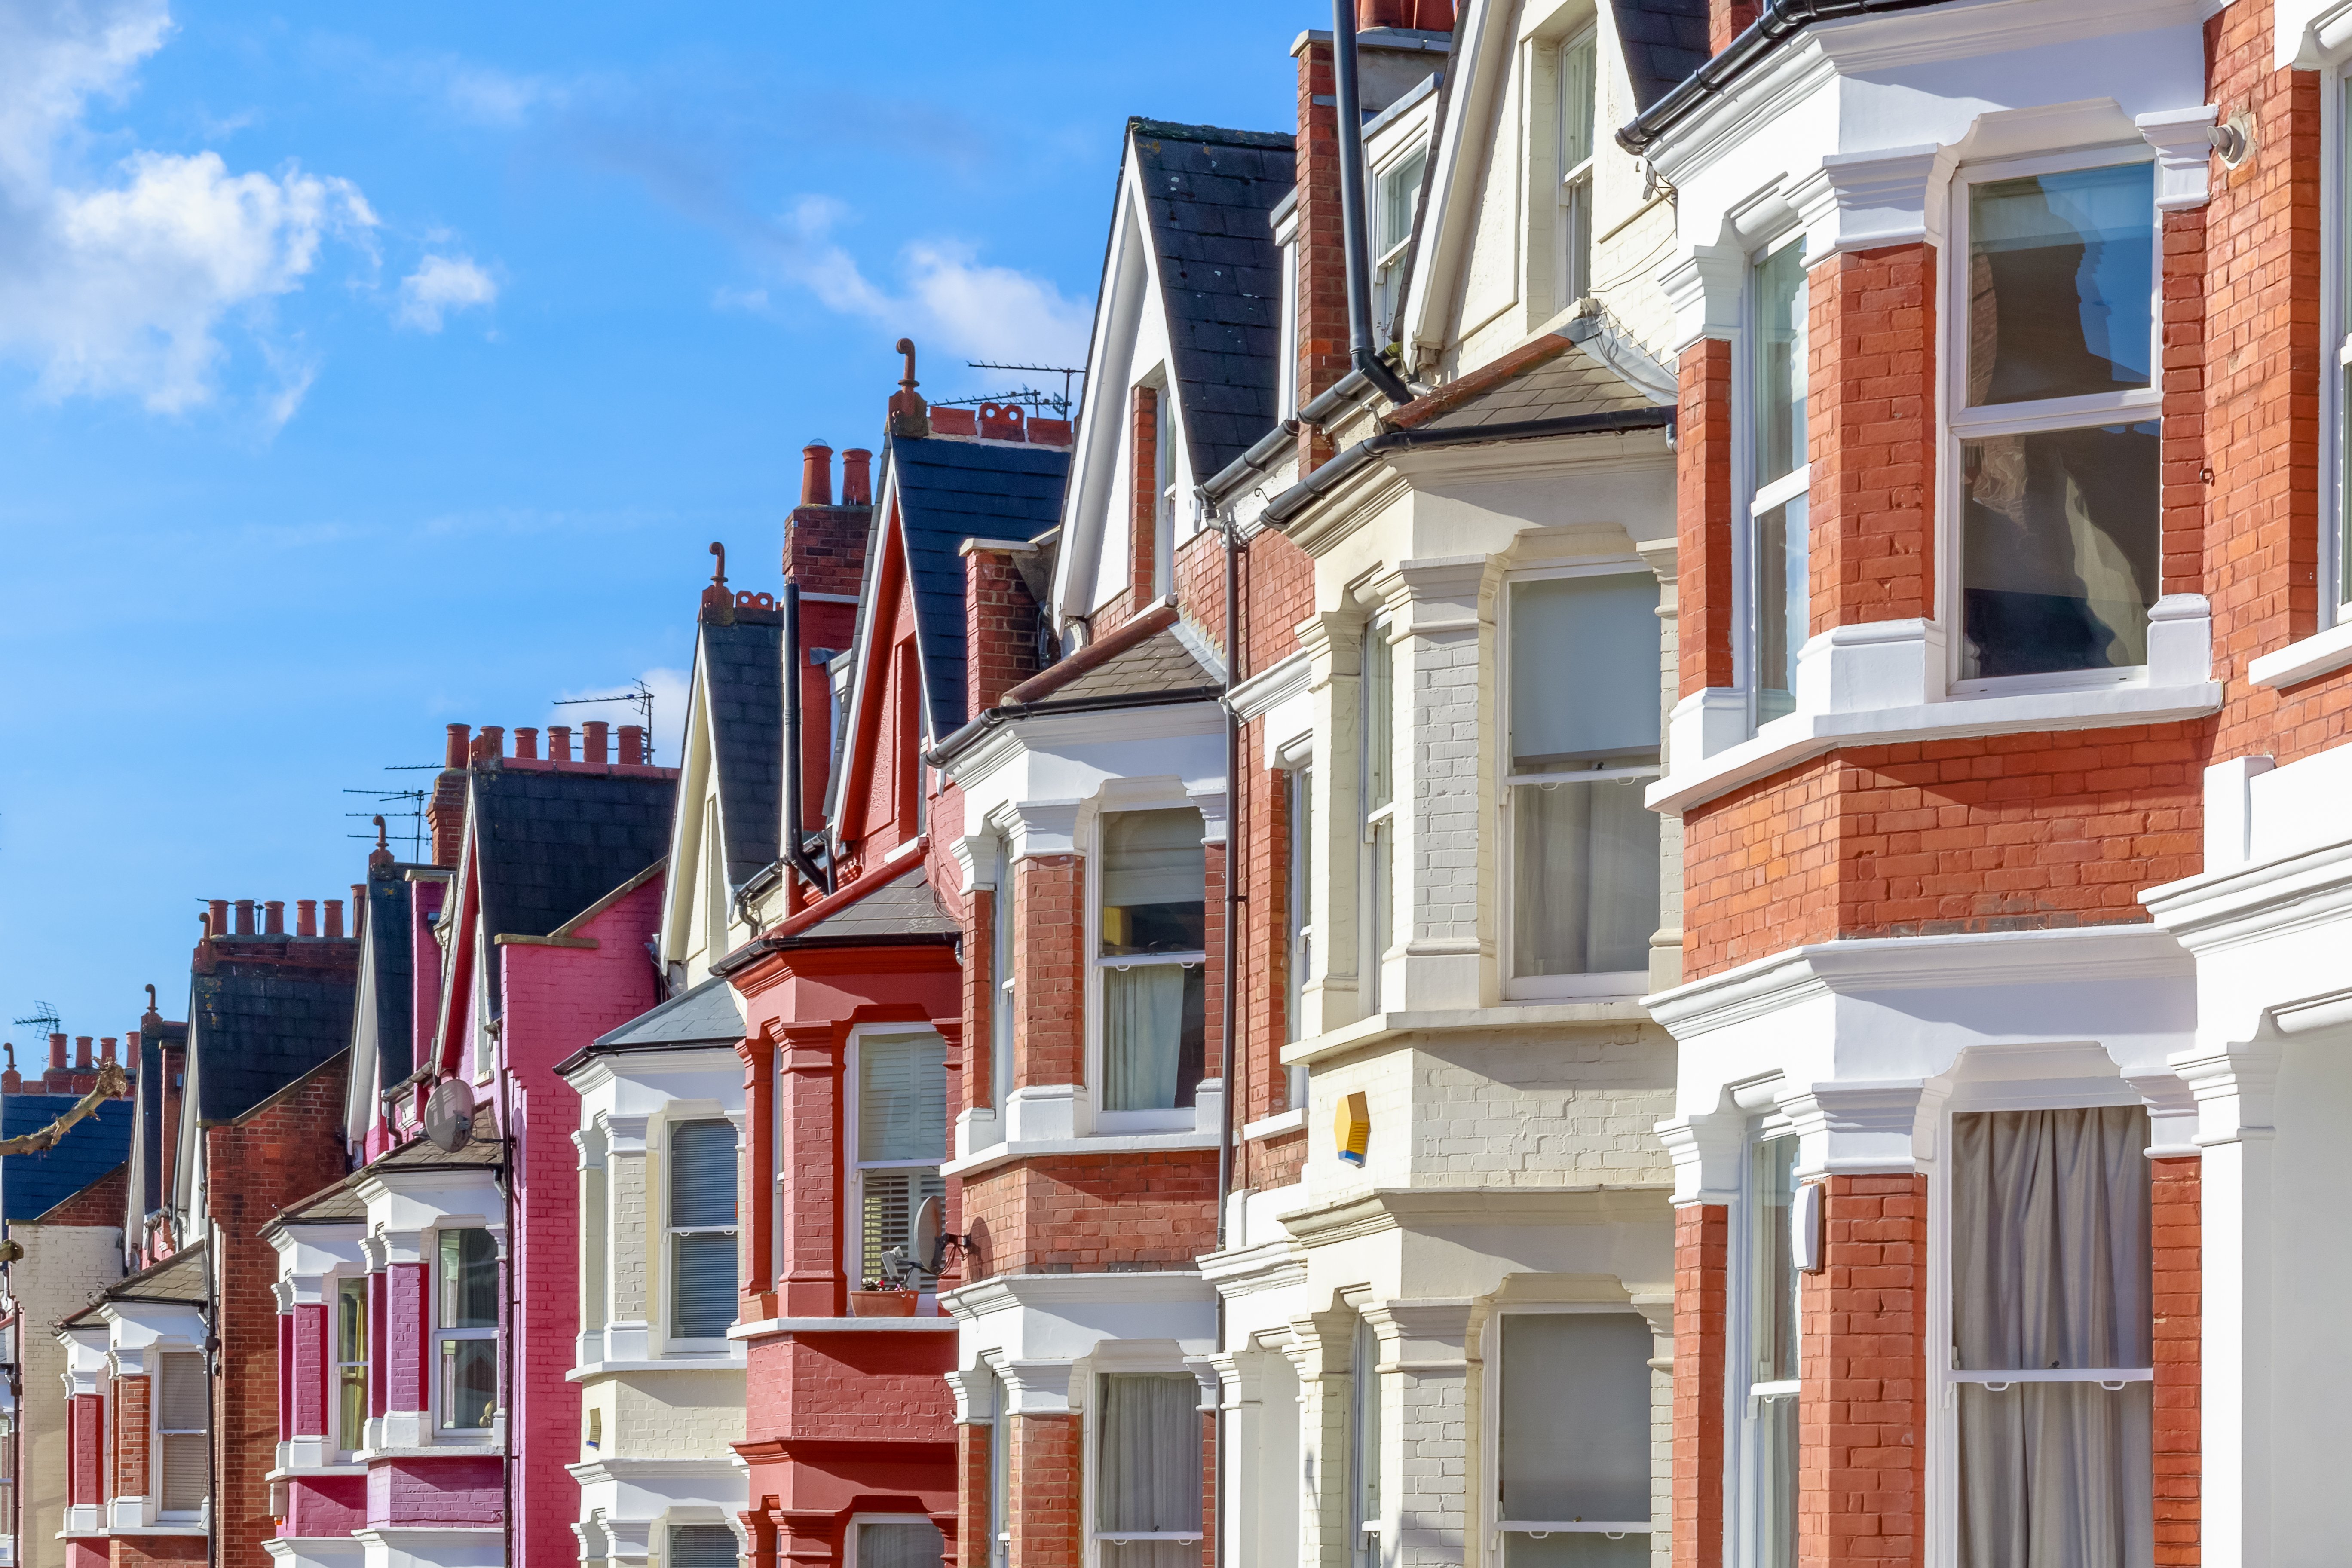 UK row of houses